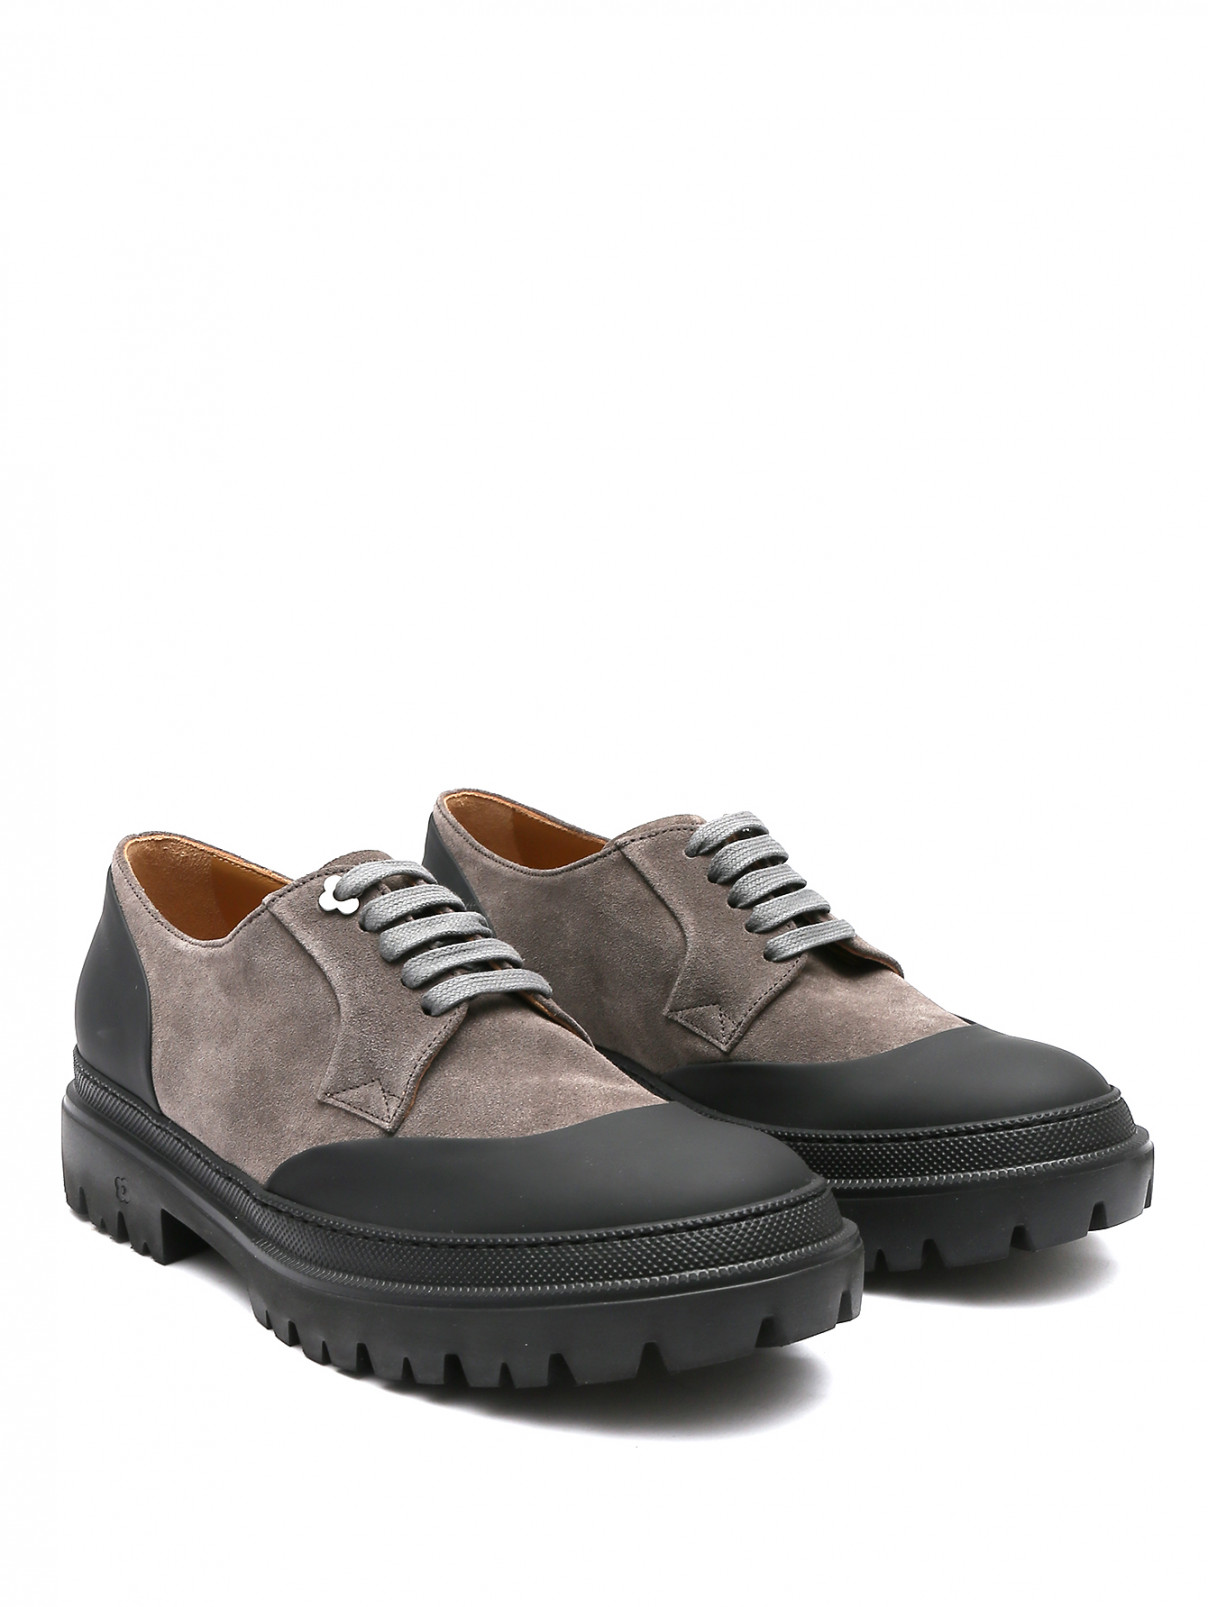 Туфли из кожи на шнурках LARDINI  –  Общий вид  – Цвет:  Серый